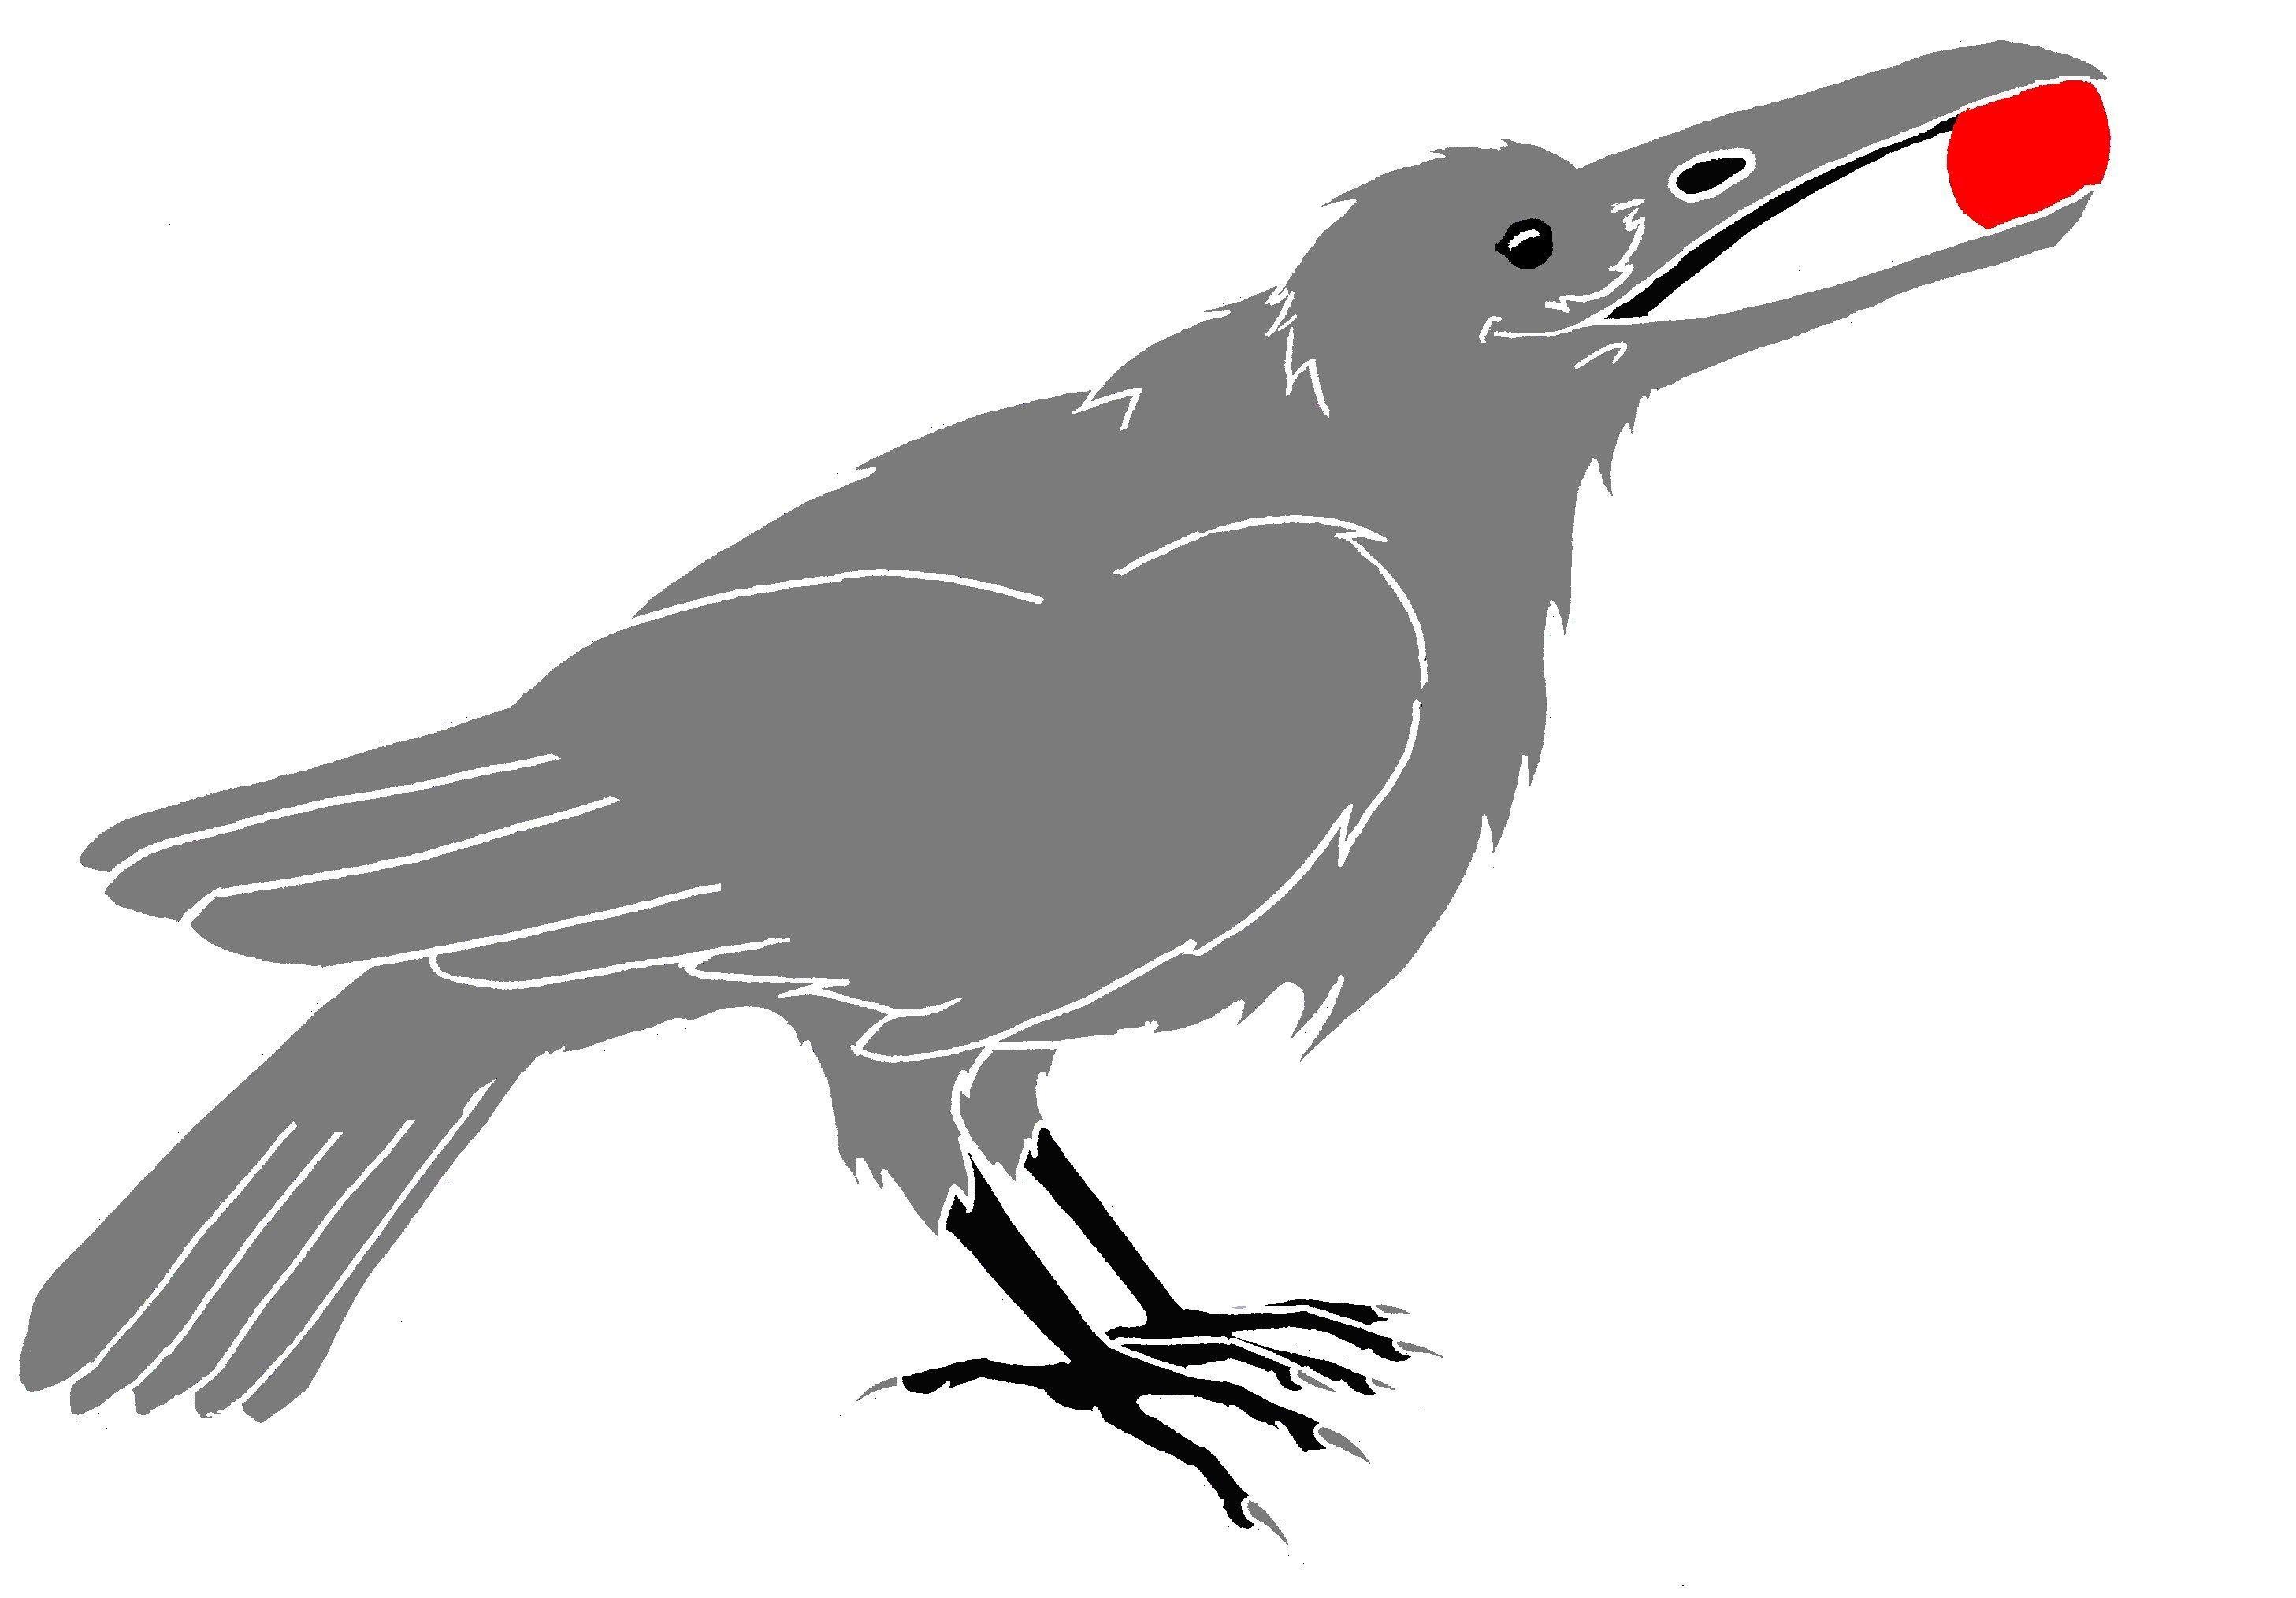 American Crow Logo - Still working on logos. Corvus tristis: Science, Craft and an Odd Bird